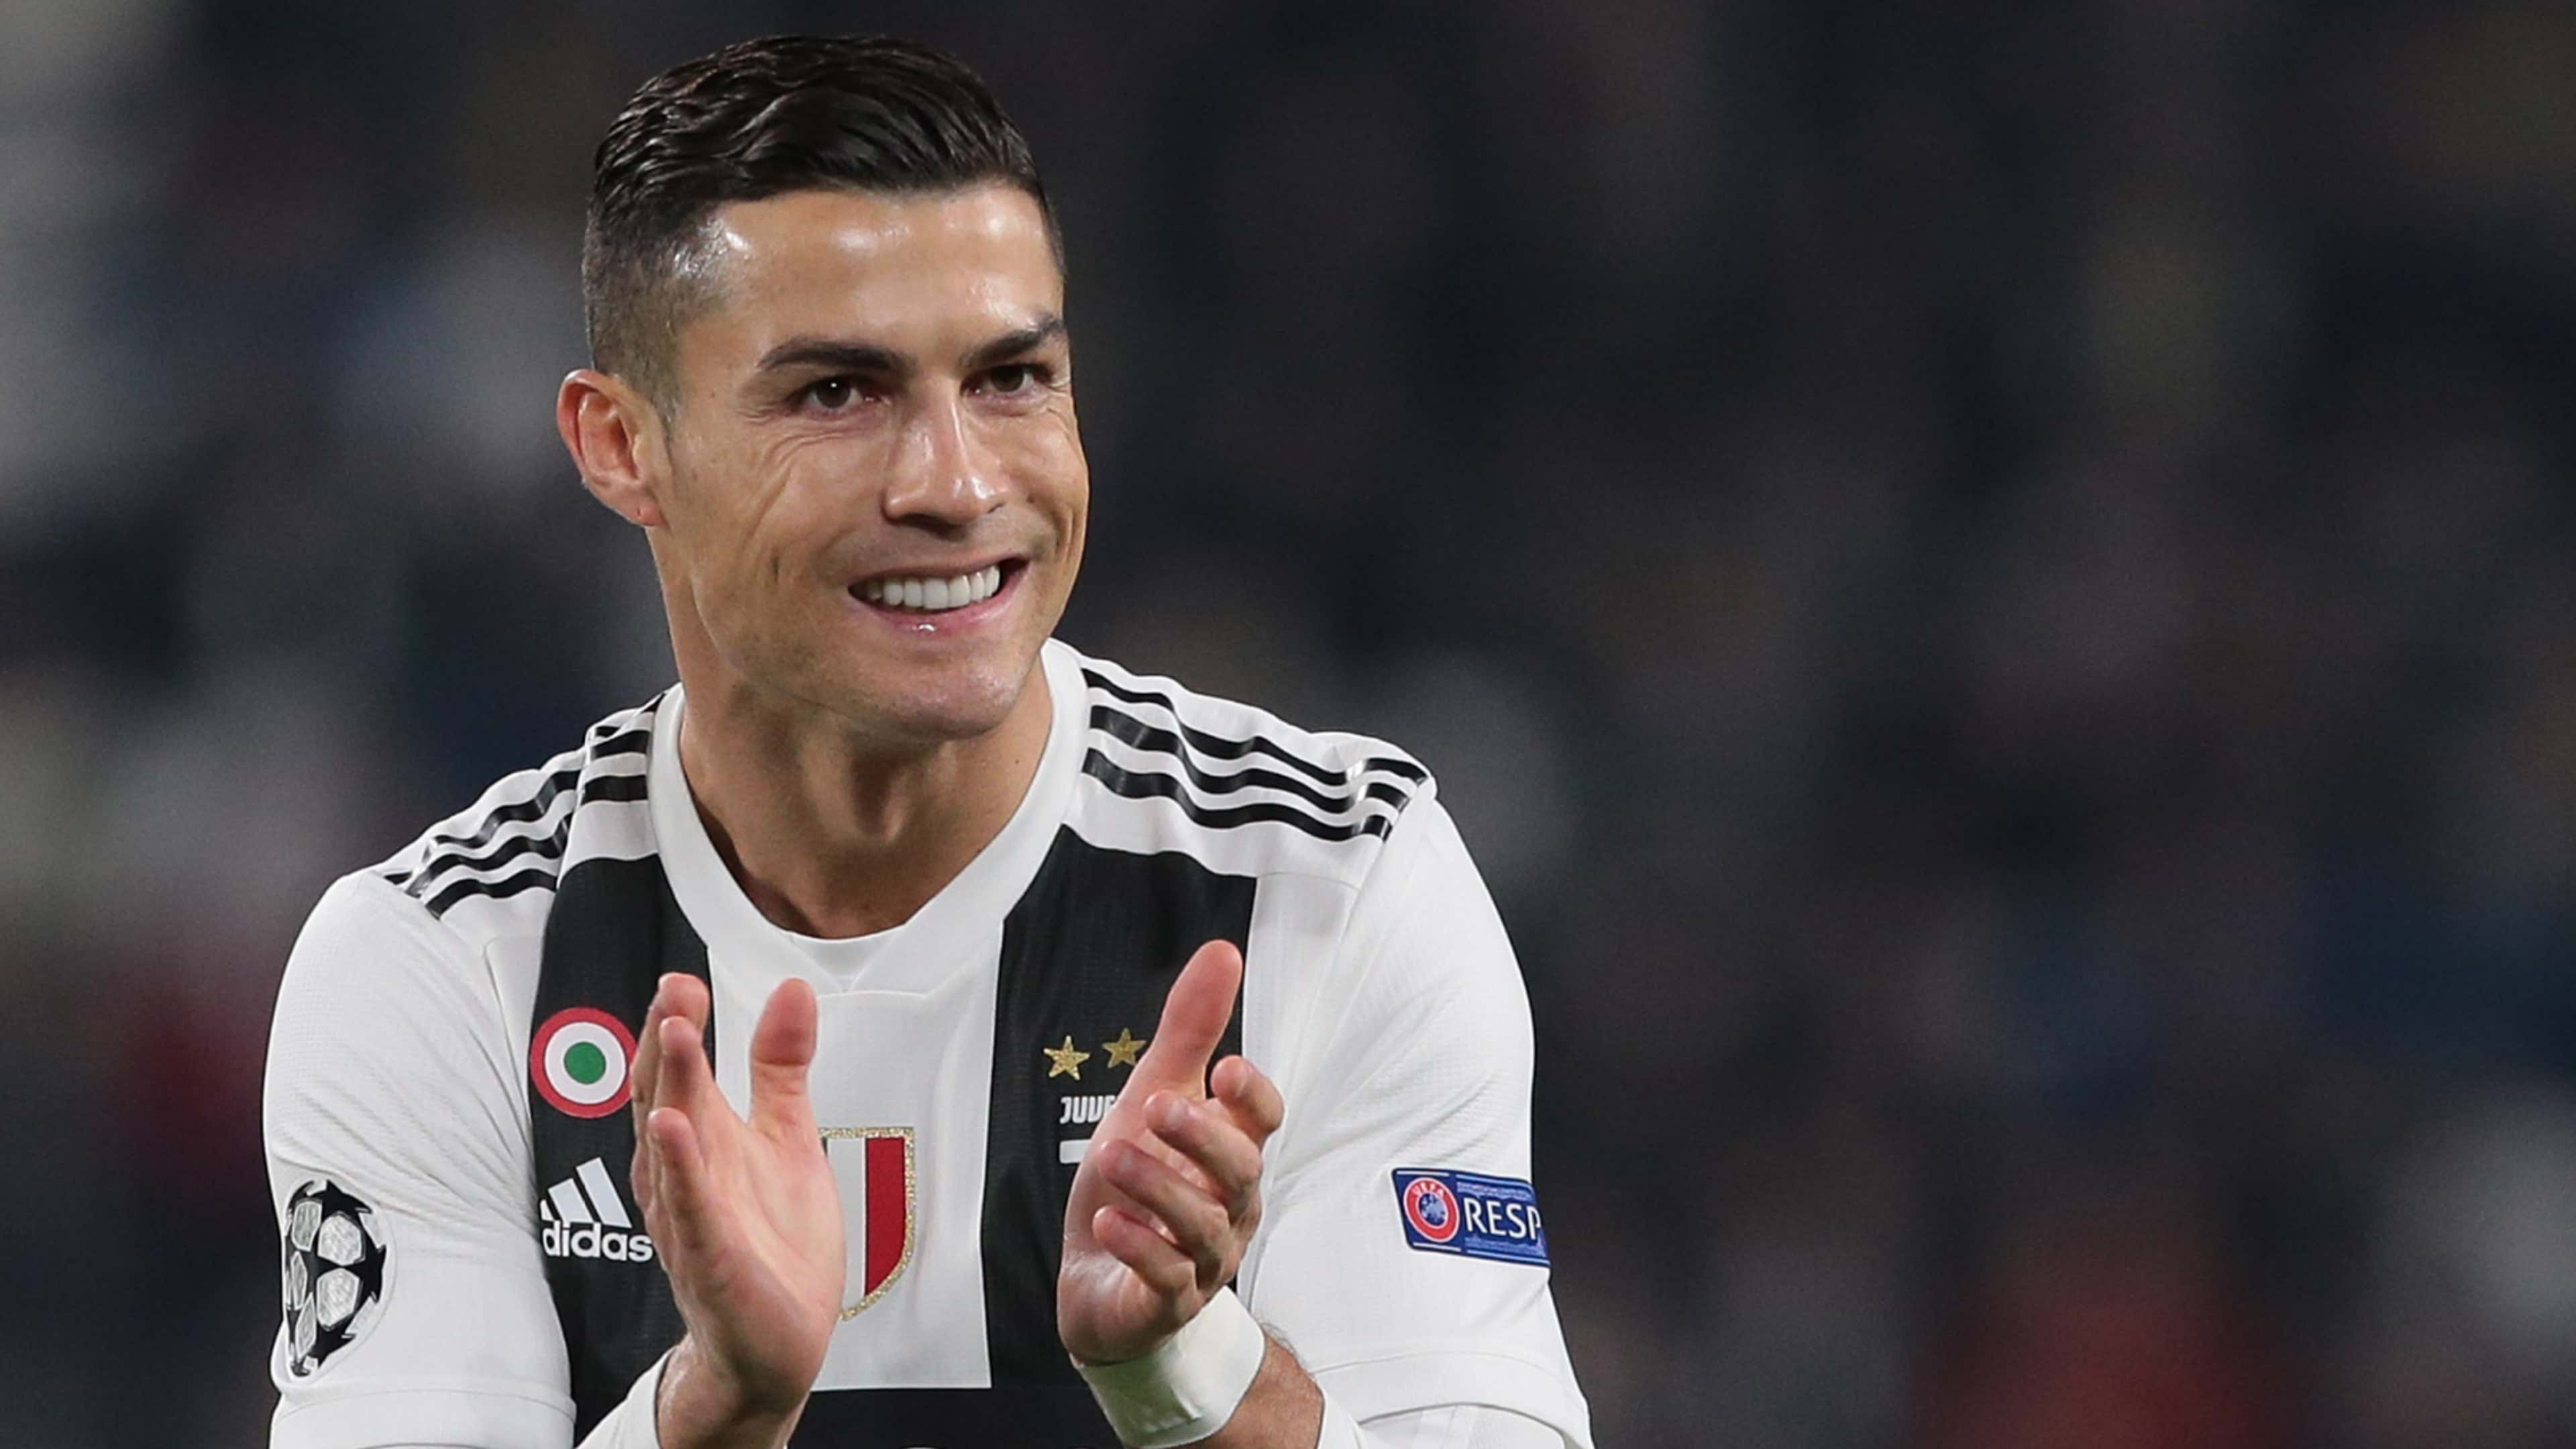 Cristiano Ronaldo's giant ego leaves little room to inspire